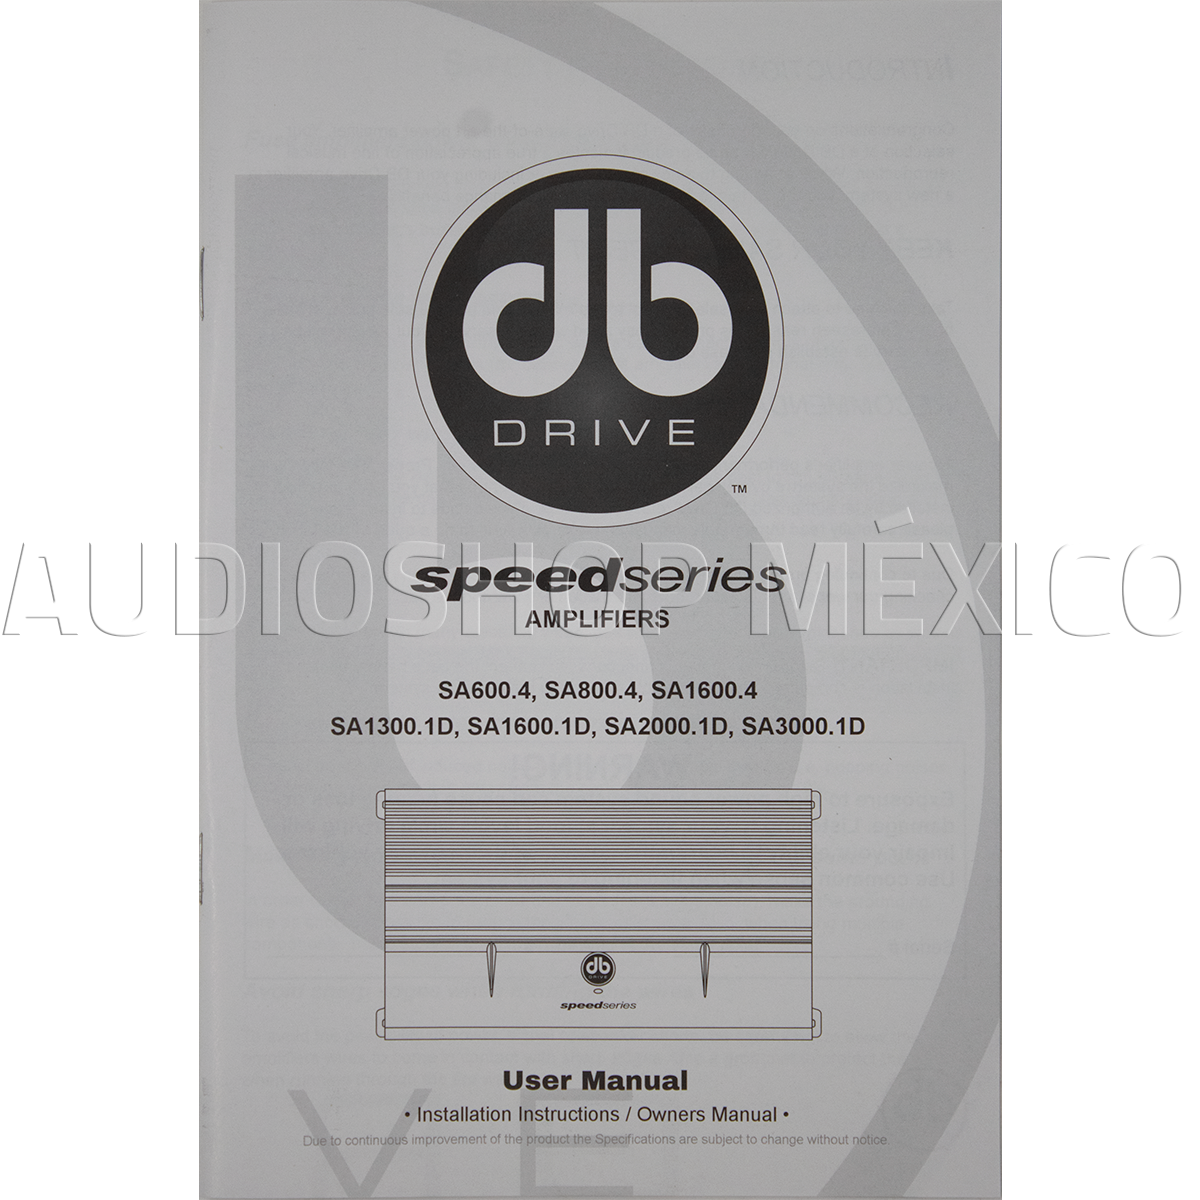 Amplificador Monoblock DB Drive SA1600.1D 1600 Watts Clase D 1 Ohm Speed Series